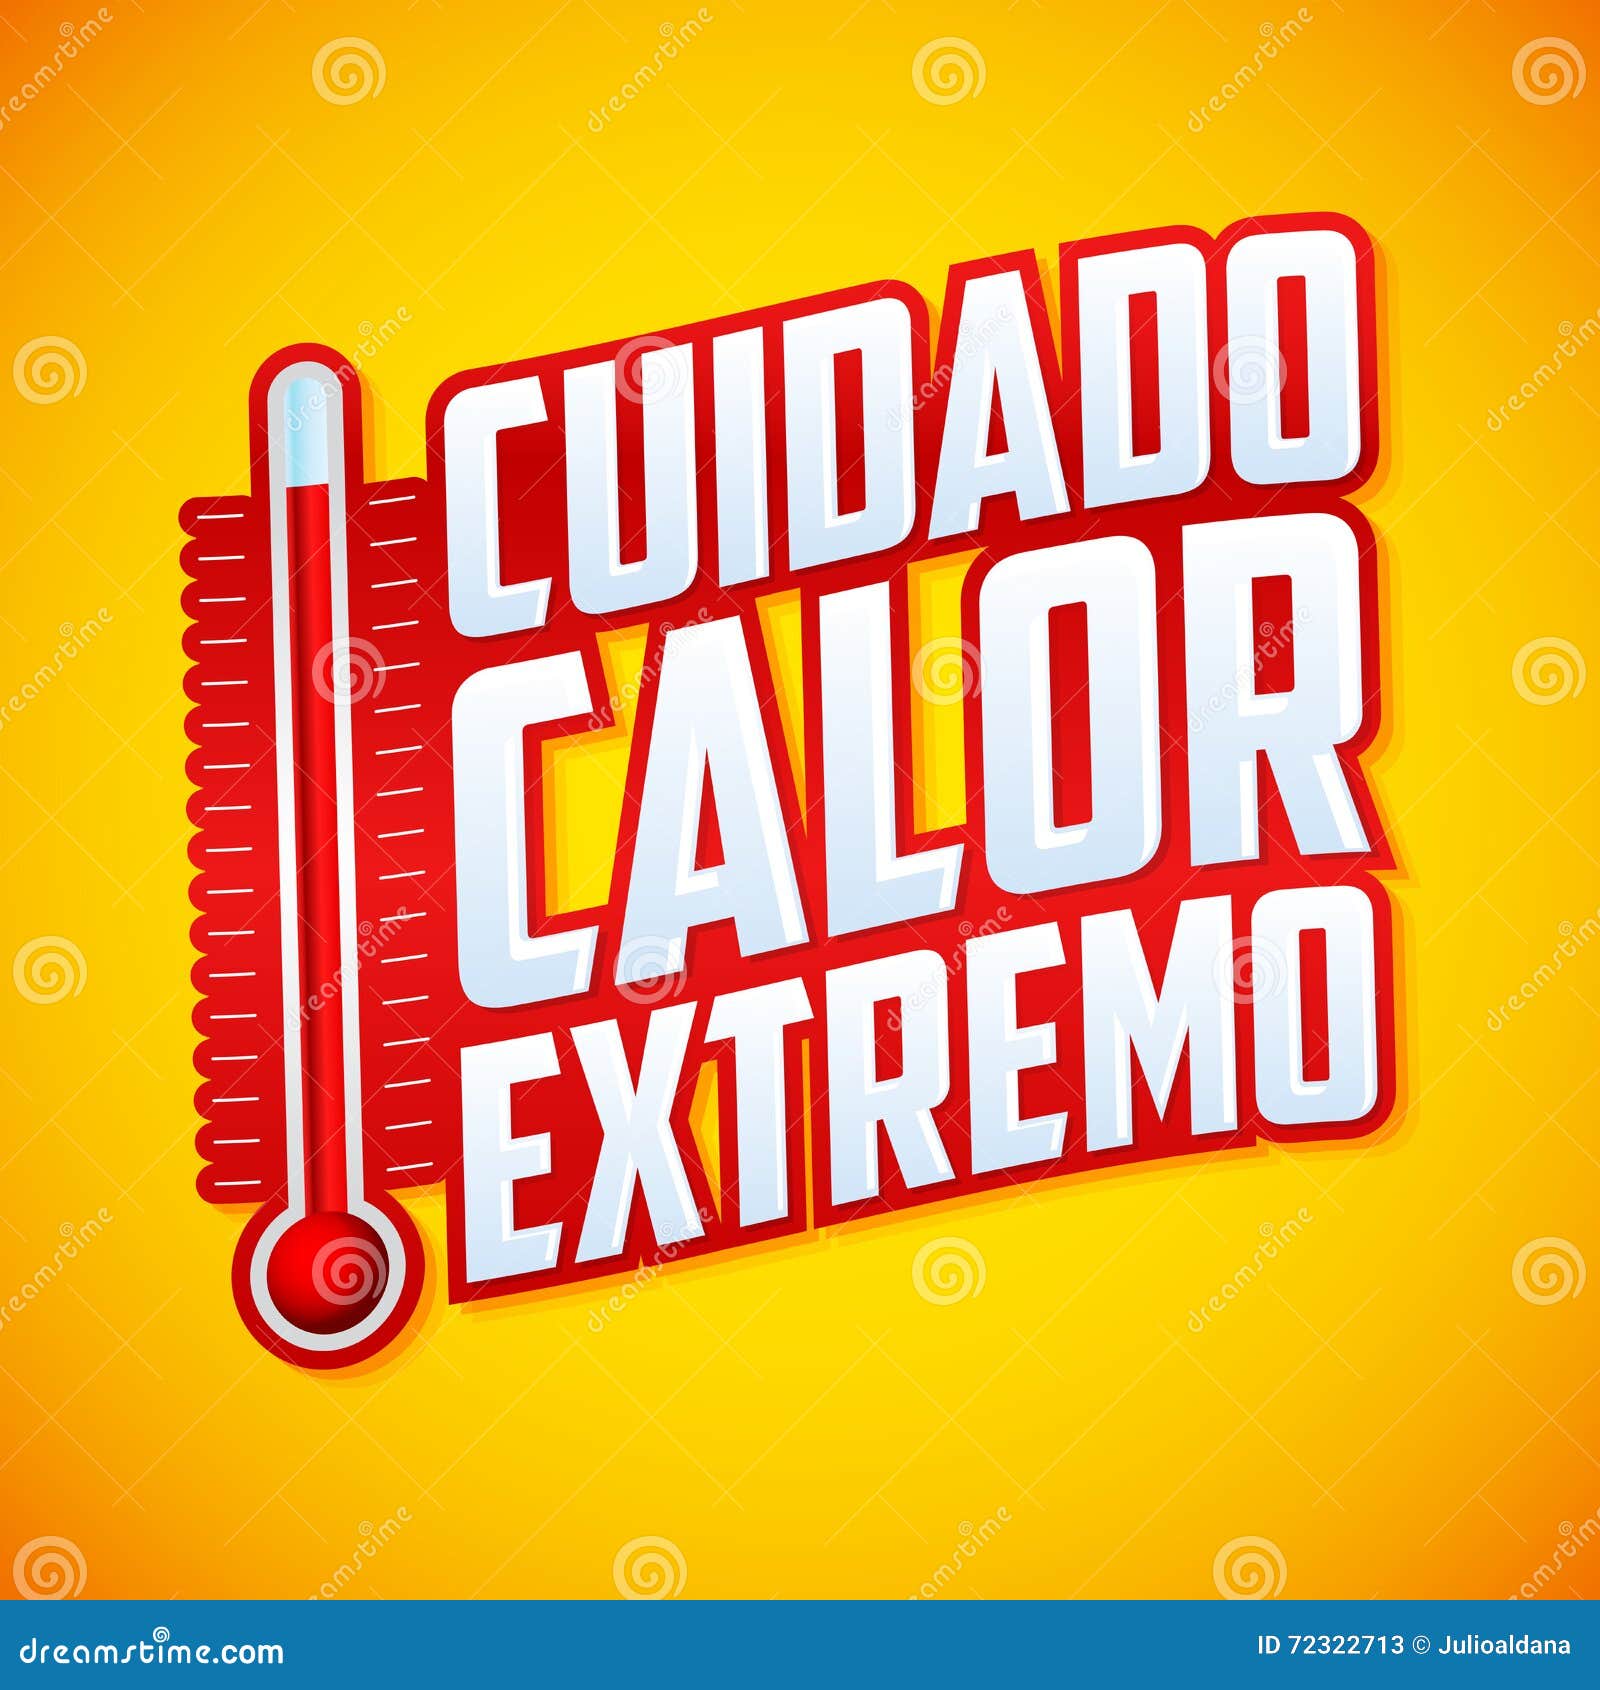 cuidado calor extremo - caution extreme heat spanish text